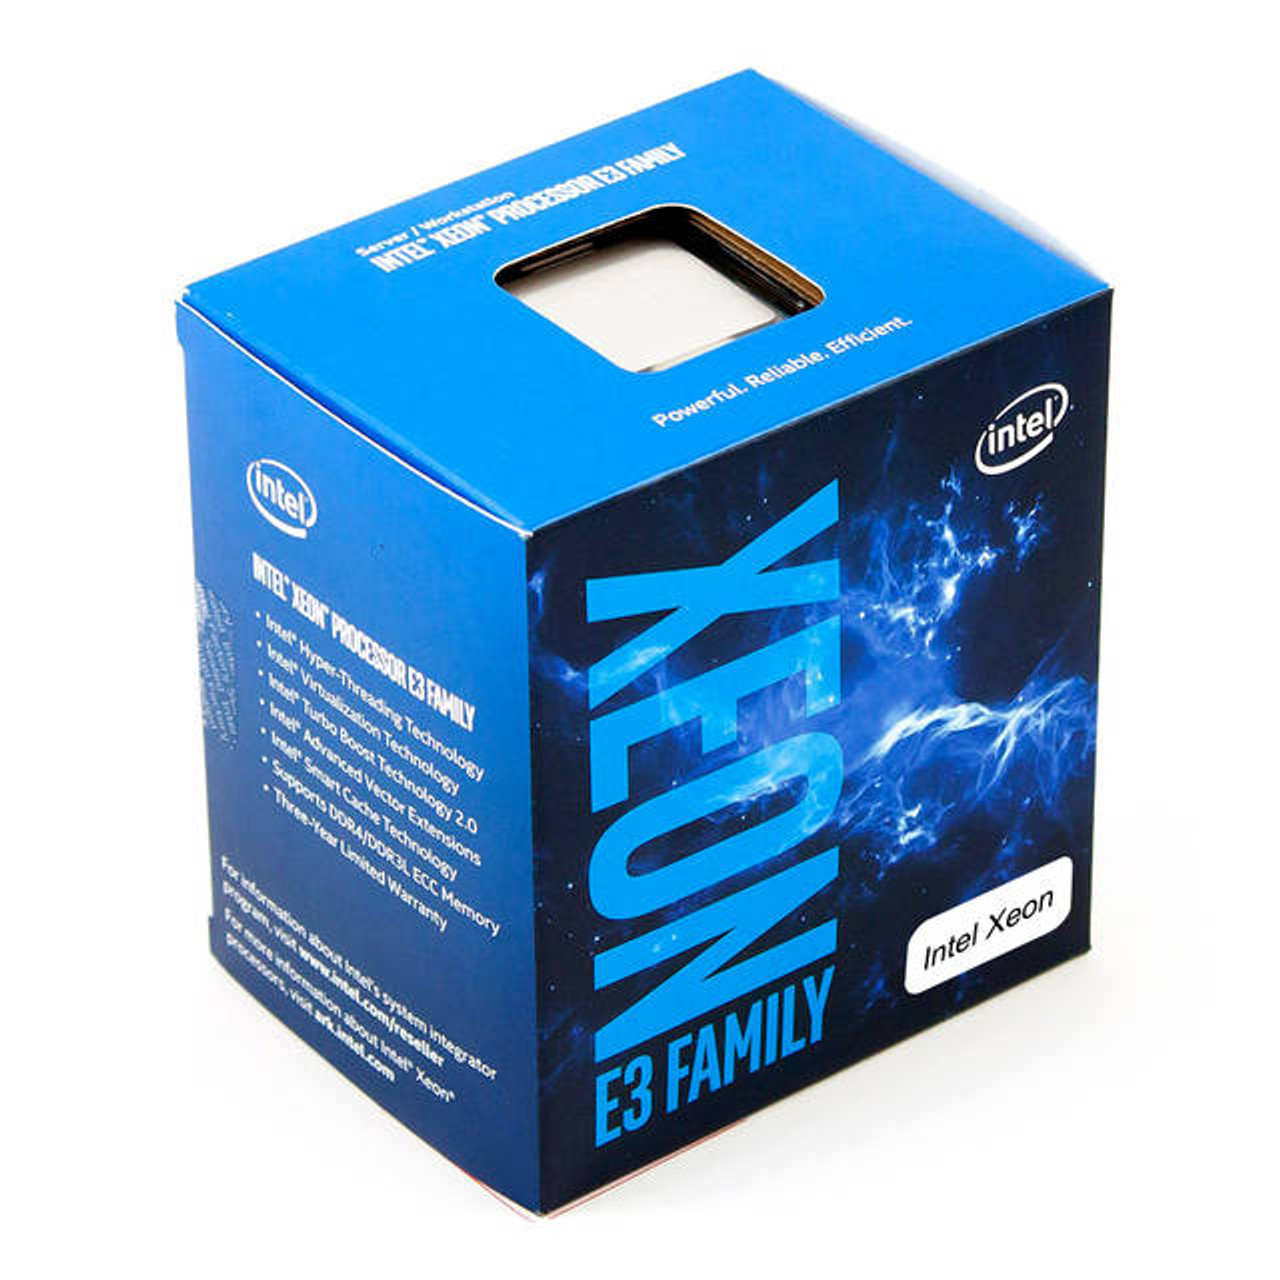 Intel Xeon E3-1220 v5 Quad-Core Skylake Processor 3.0GHz 8.0GT/s 8MB LGA 1151 CPU,